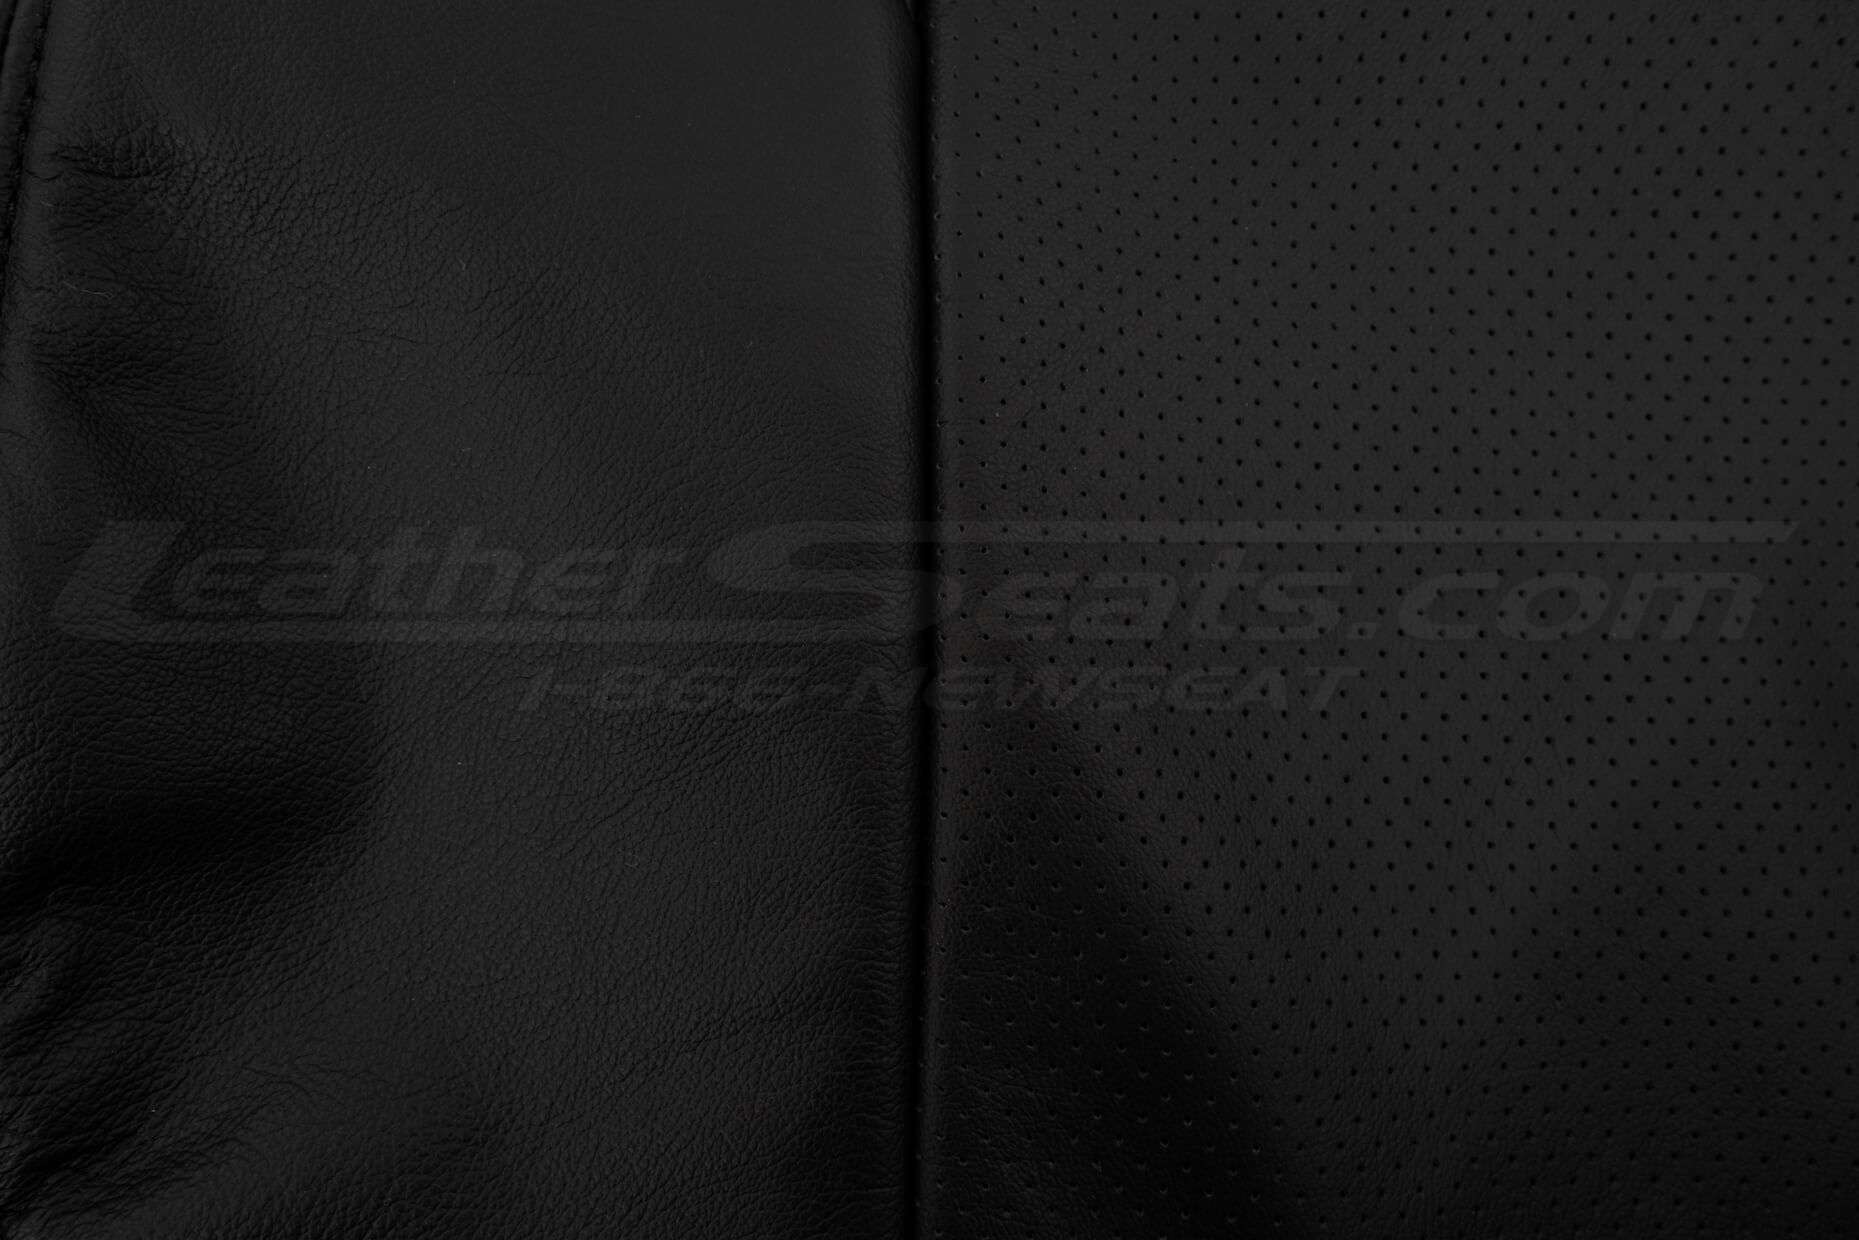 04-06 Pontiac GTO Leather Kit - Ecstasy Black - Leather and perforation texture comparison